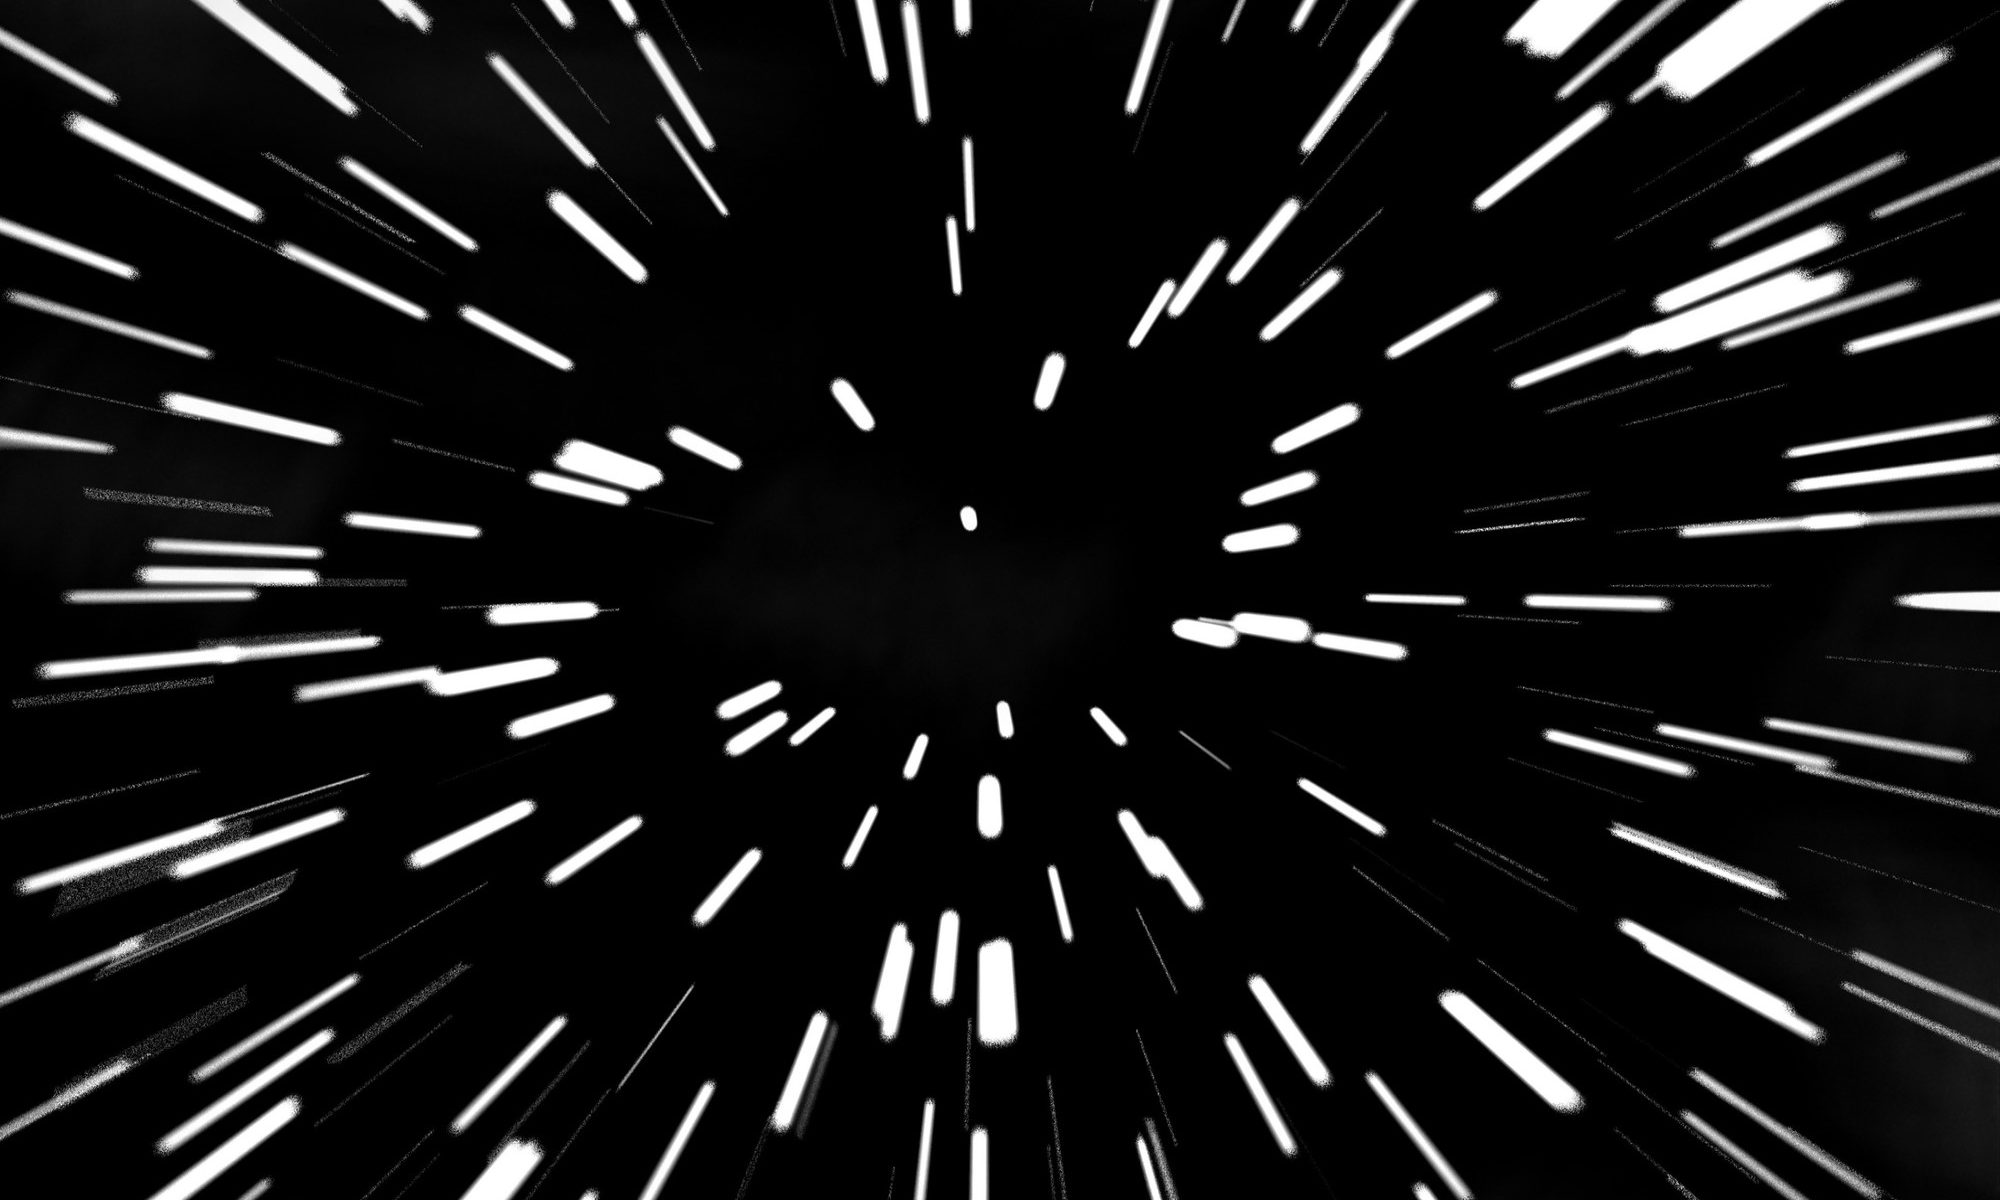 image of star wars hyperspace star blur